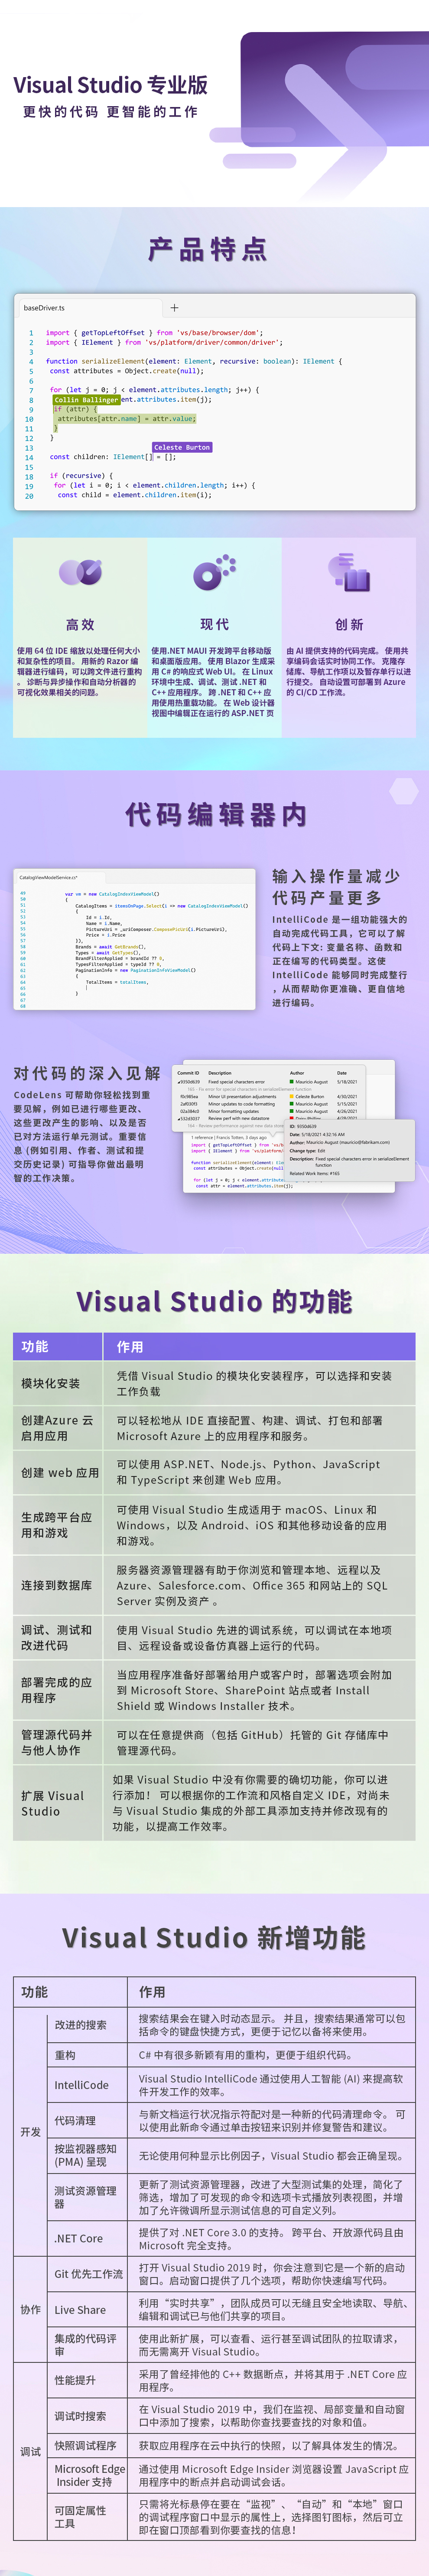 visual Studio 激活码.jpg